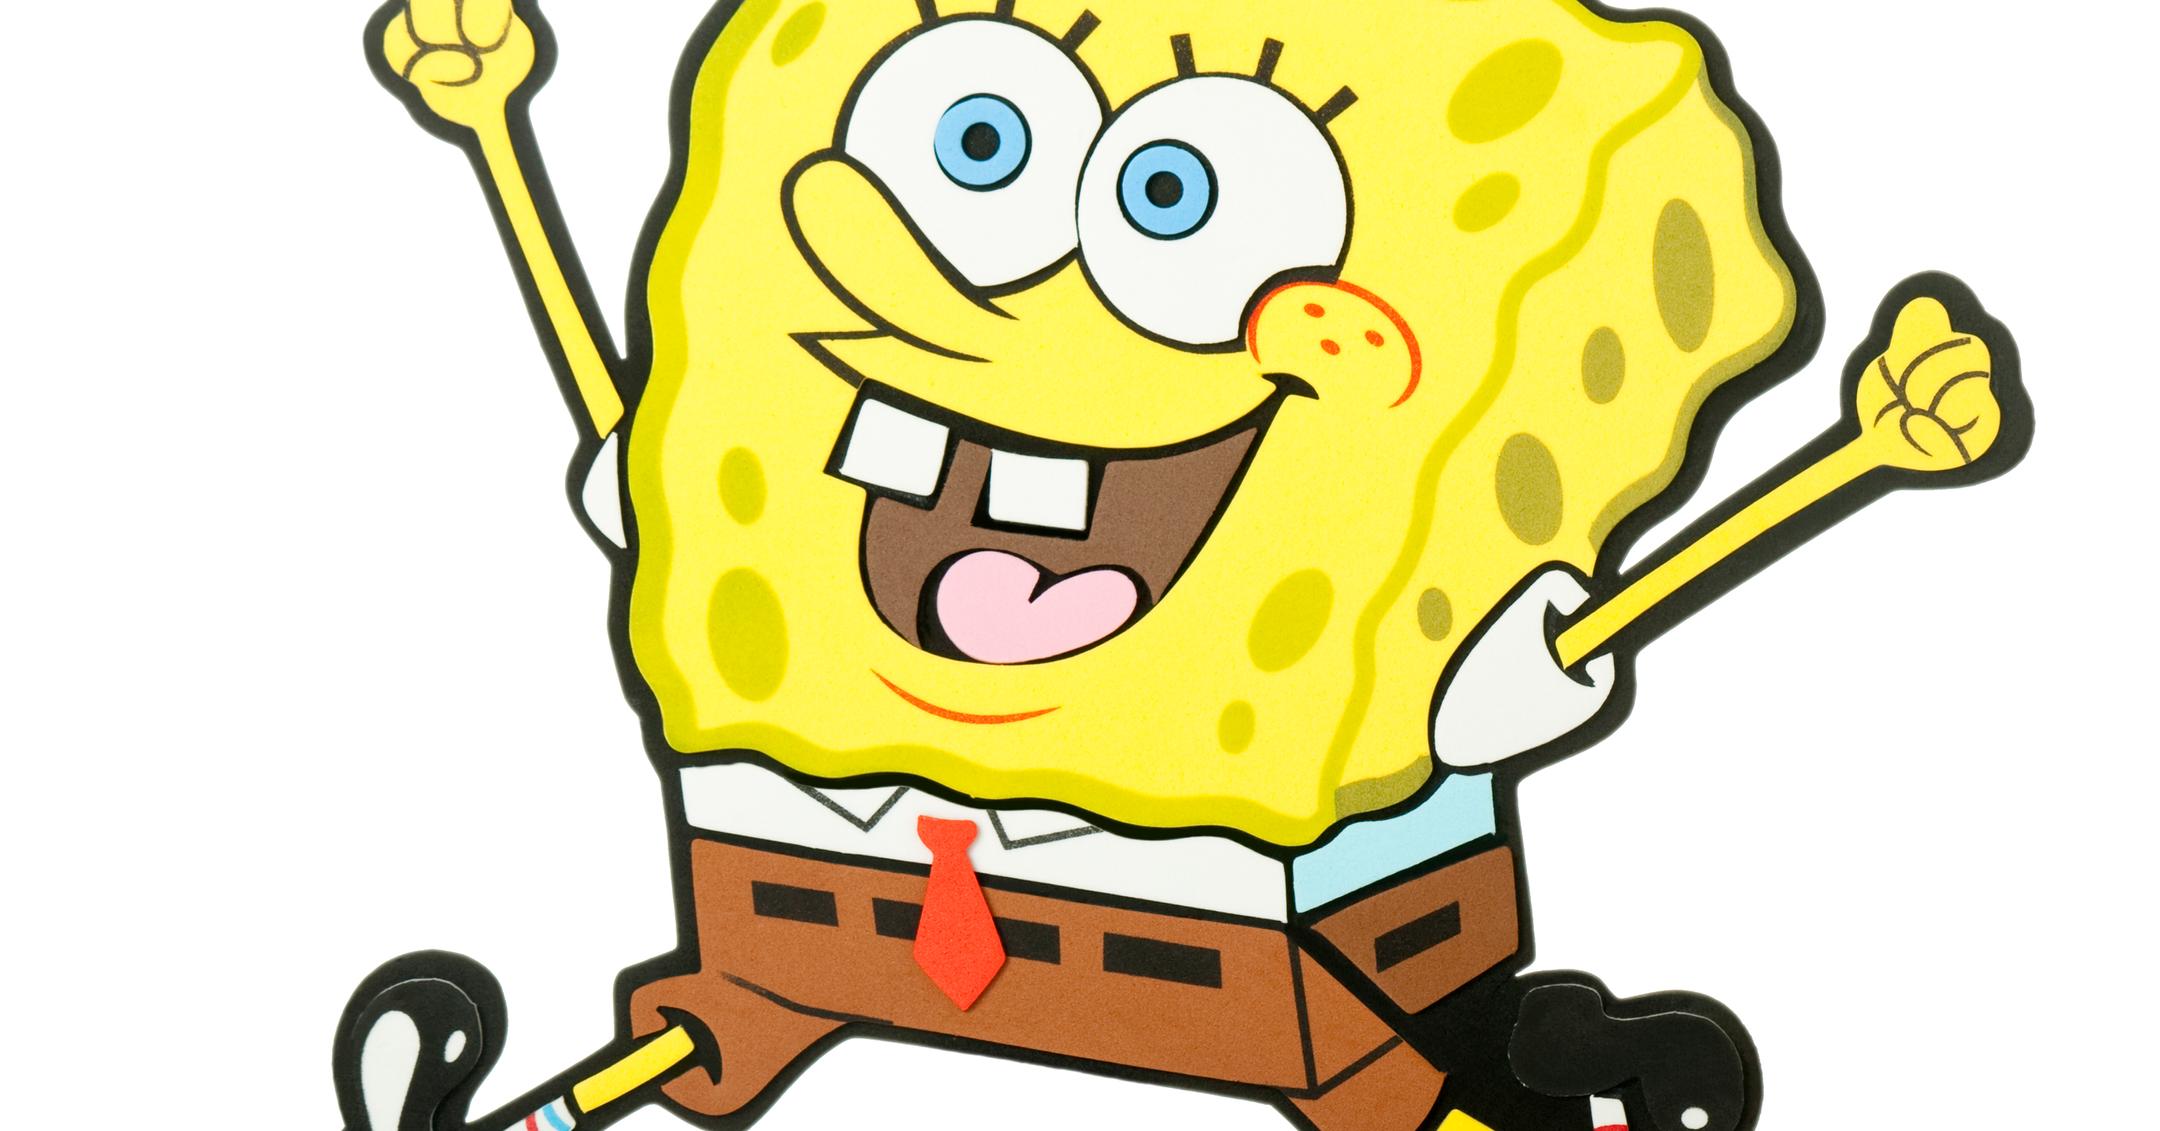 What Gender Is Spongebob Squarepants Is The Character Male Or Female - roblox spongebob movie sponge out of water youtube